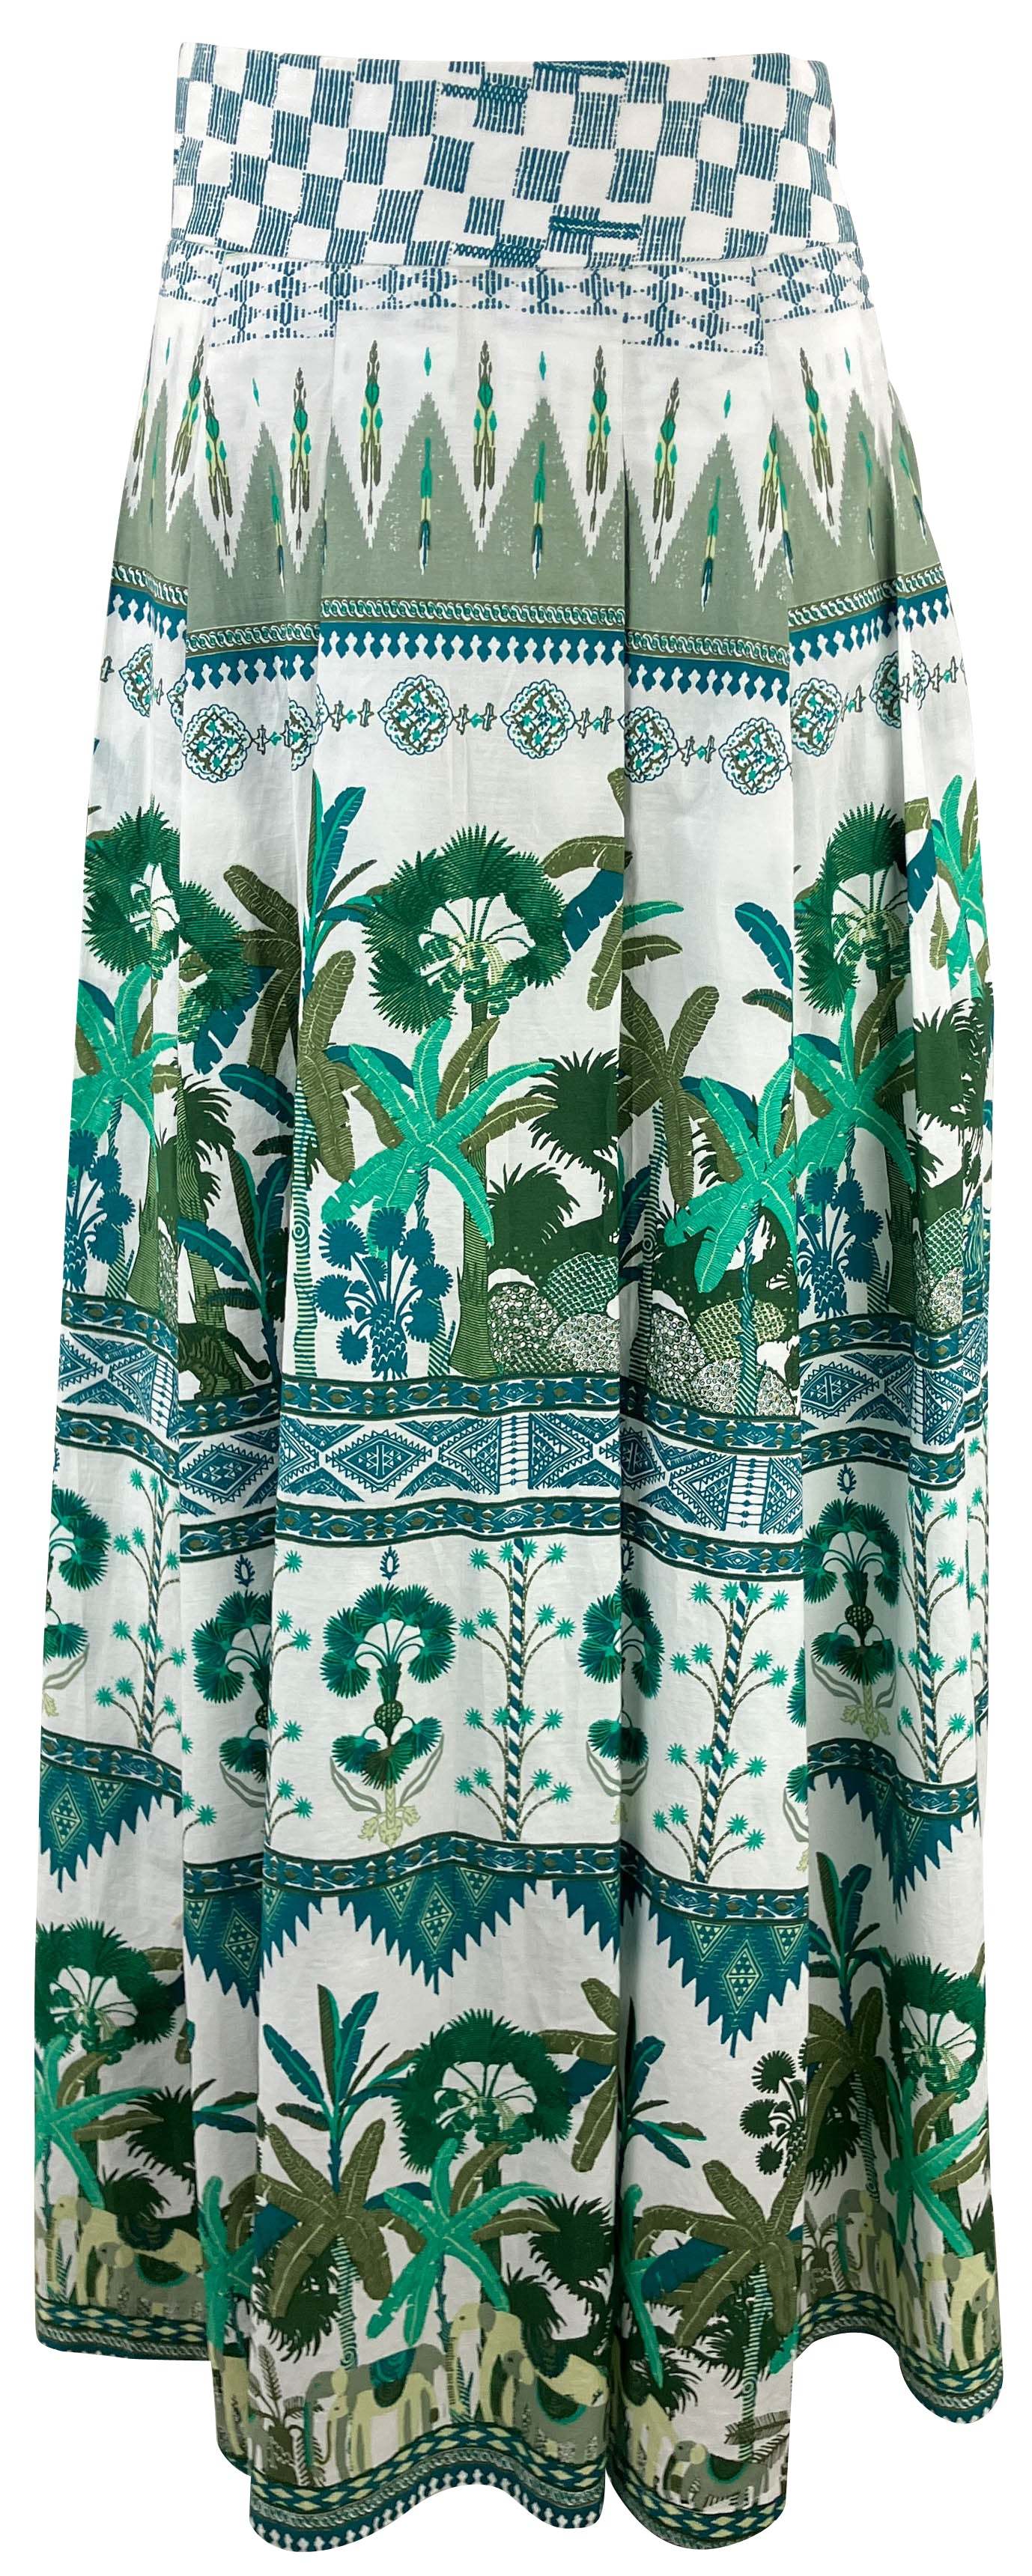 Emporio Sirenuse Elephant Family Midi Skirt in Blue/Green - Discounts on Emporio Sirenuse at UAL